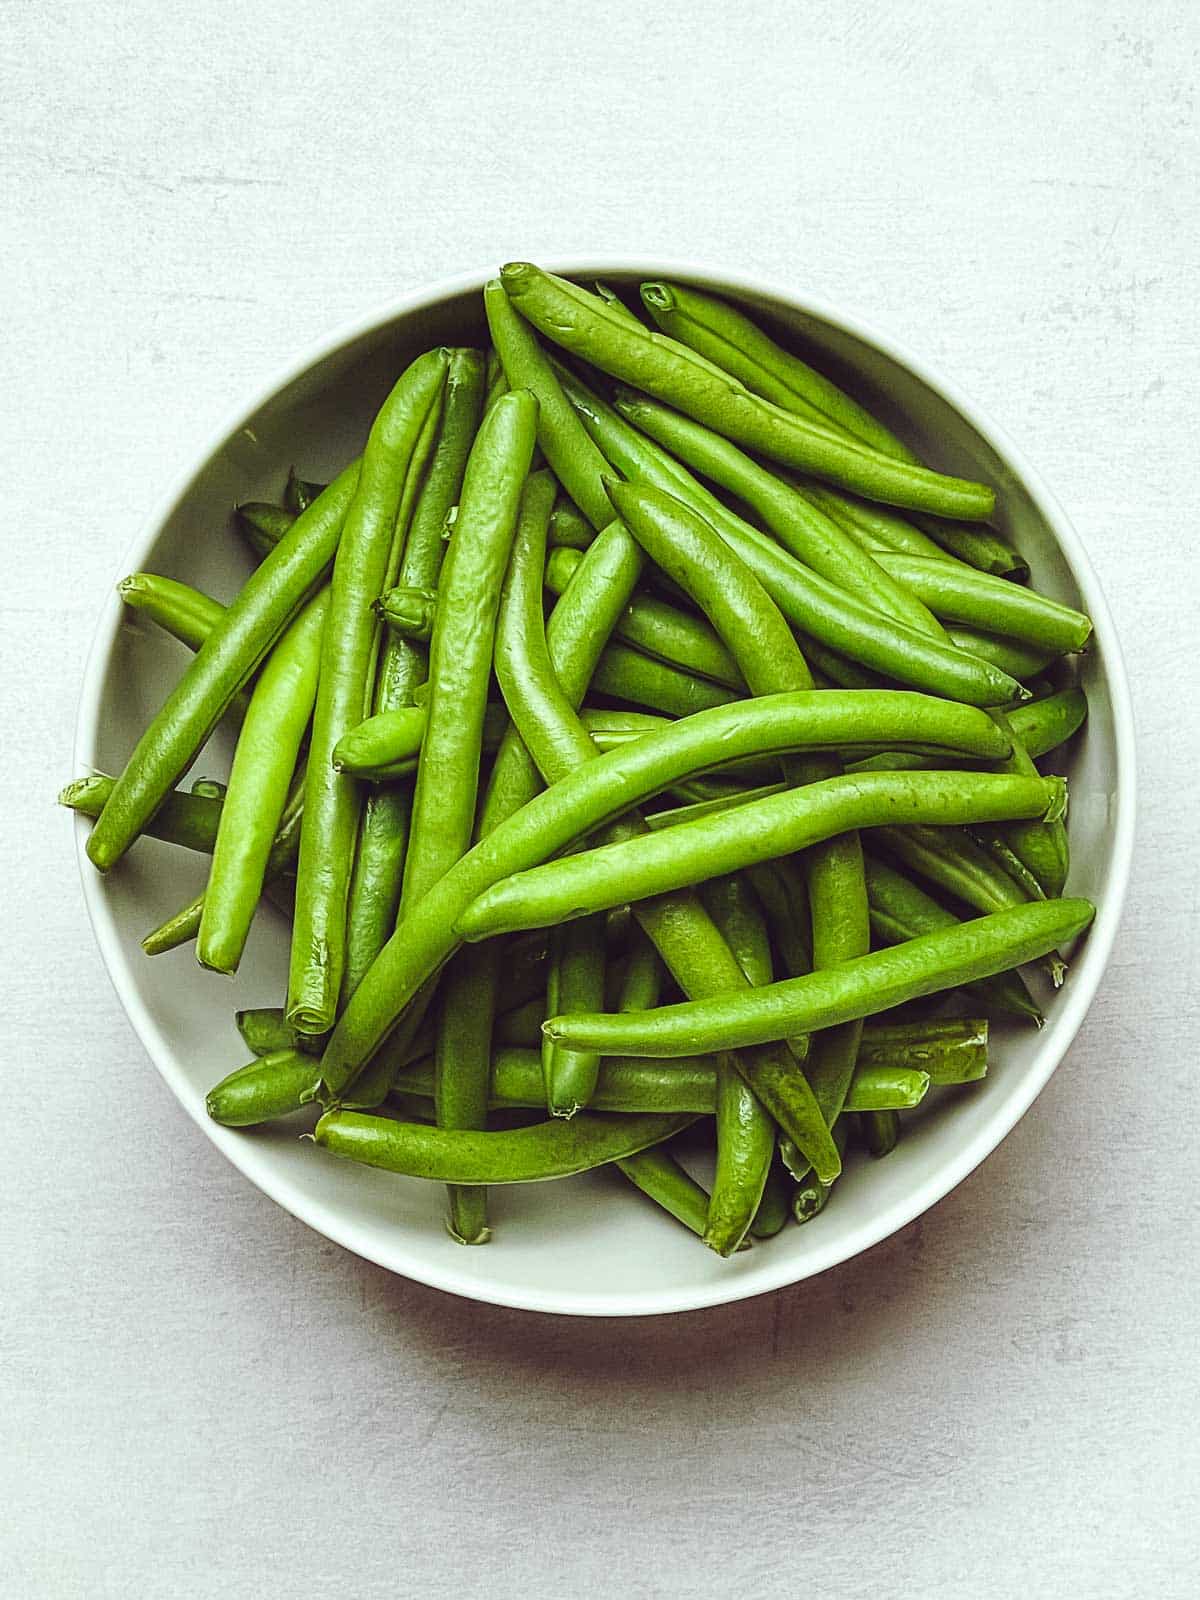 Fresh green beans in a round white bowl.